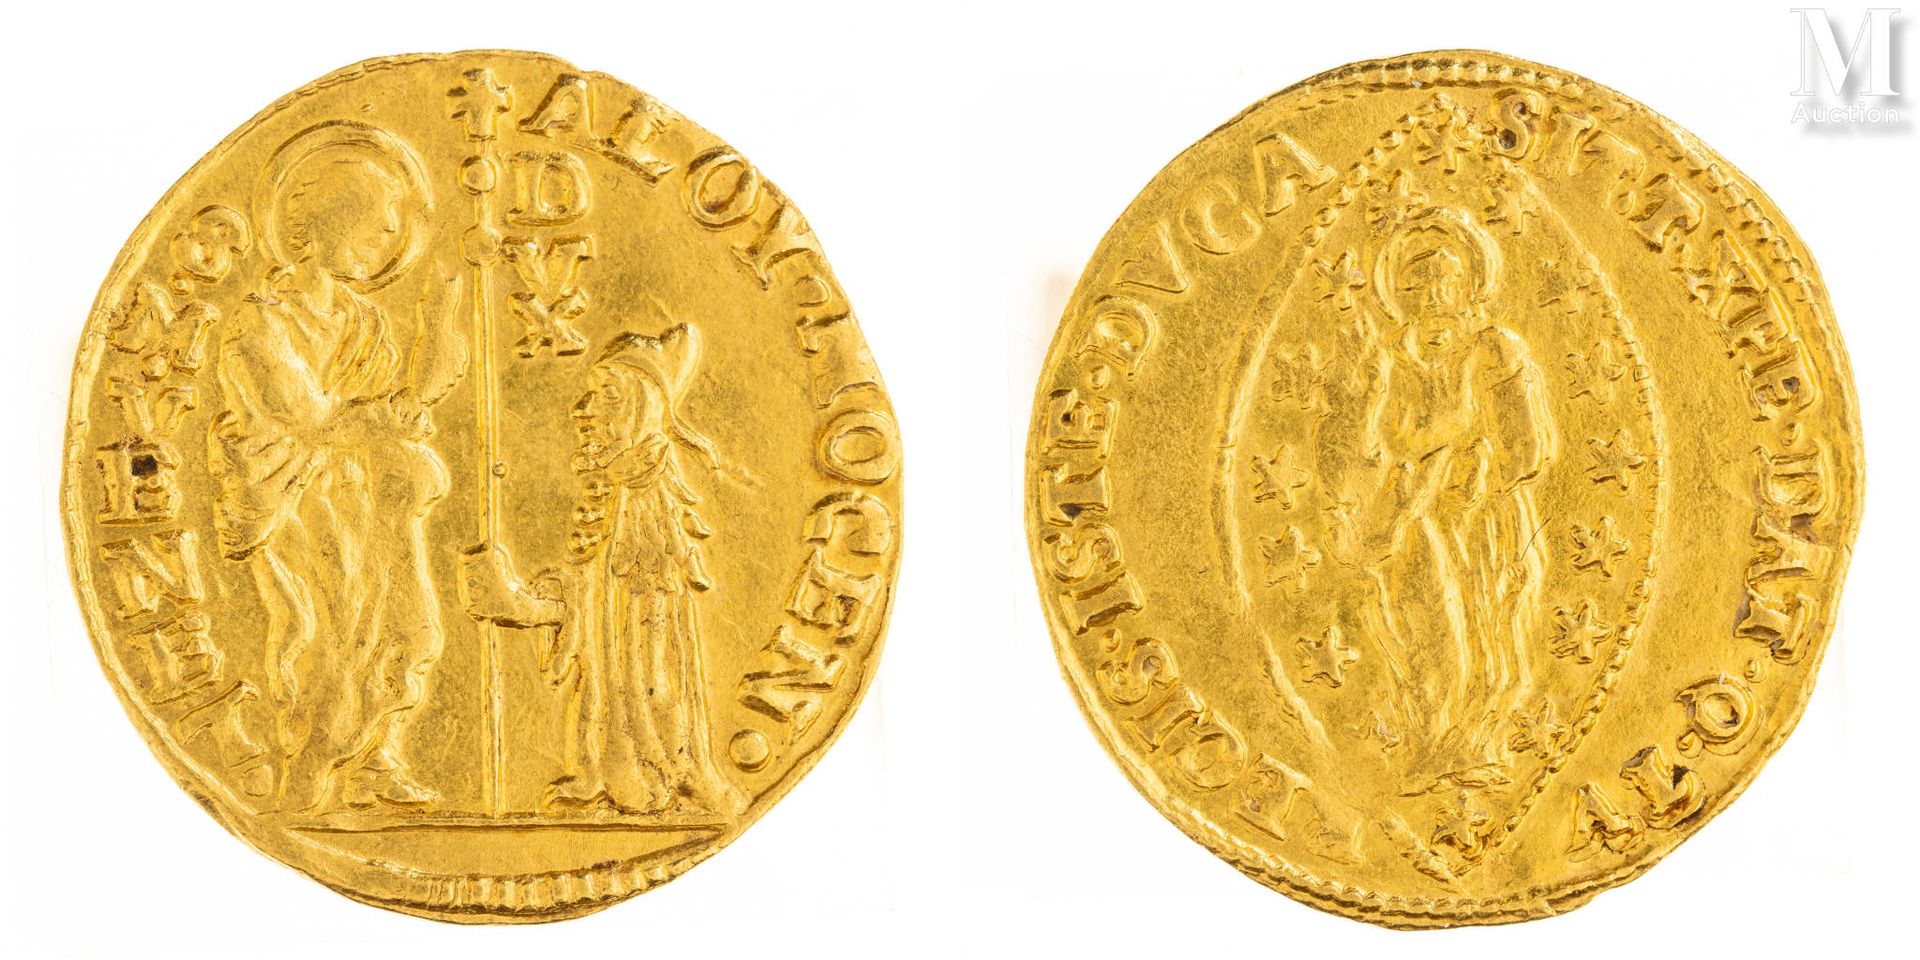 Venise - Alvise Ier Mocenigo (1570-1577) Gold sequin 
A: Saint Mark blessing the&hellip;